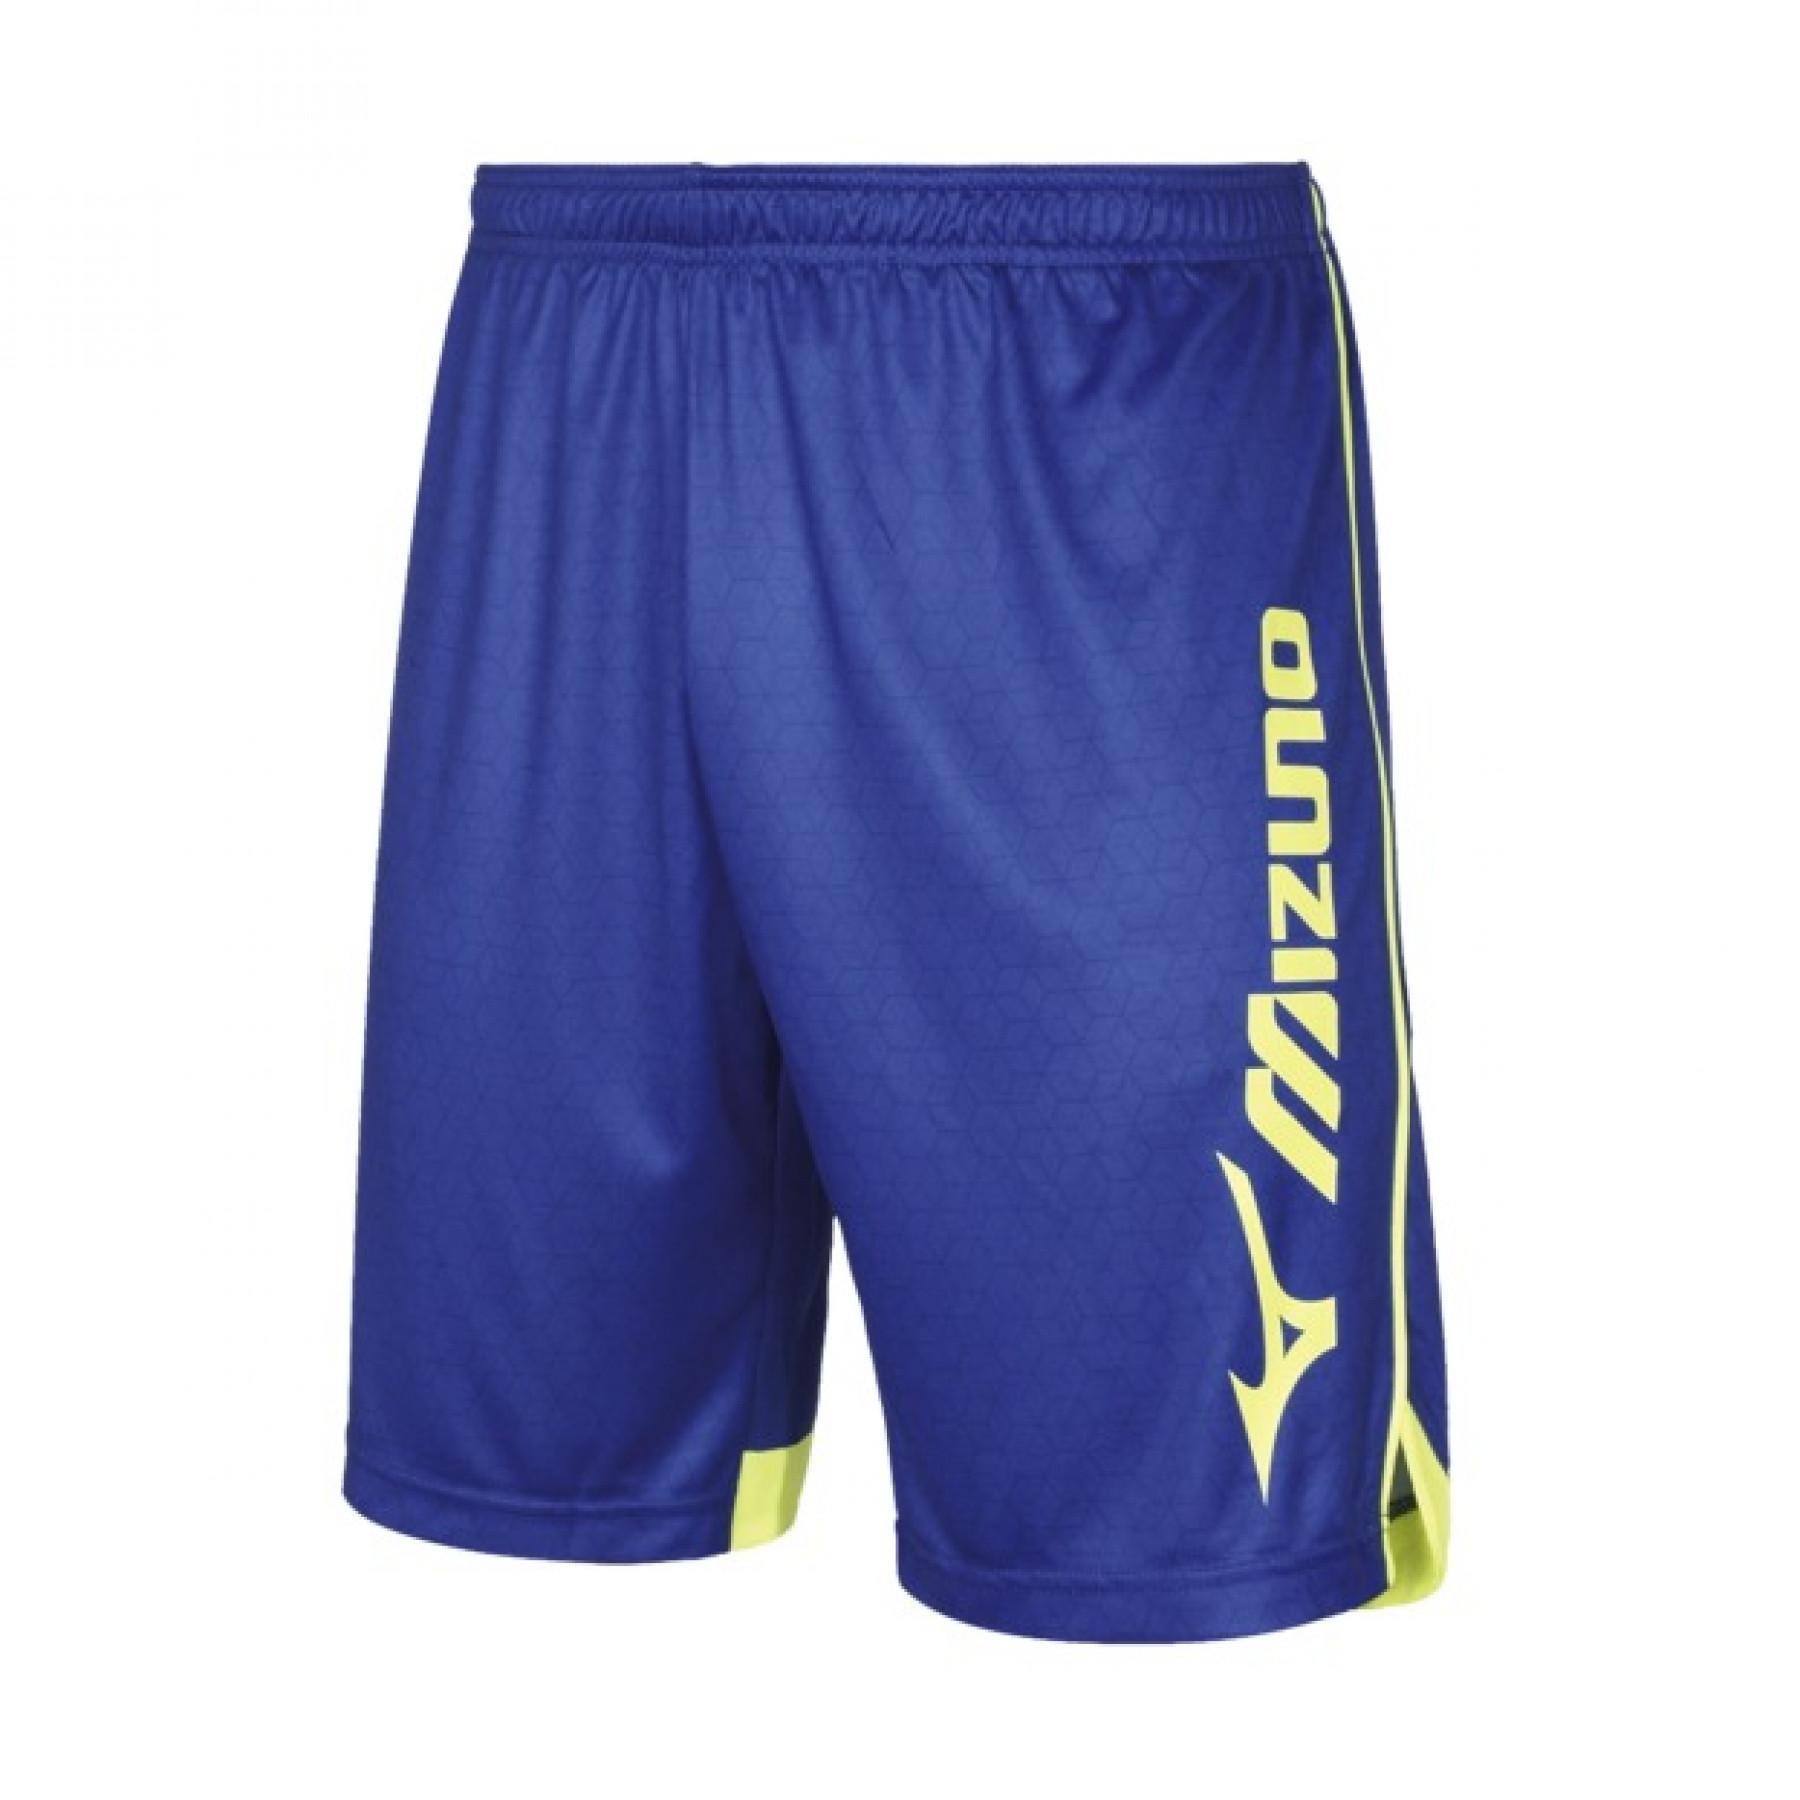 Short Mizuno Ranma - Shorts - Textile - Handball wear